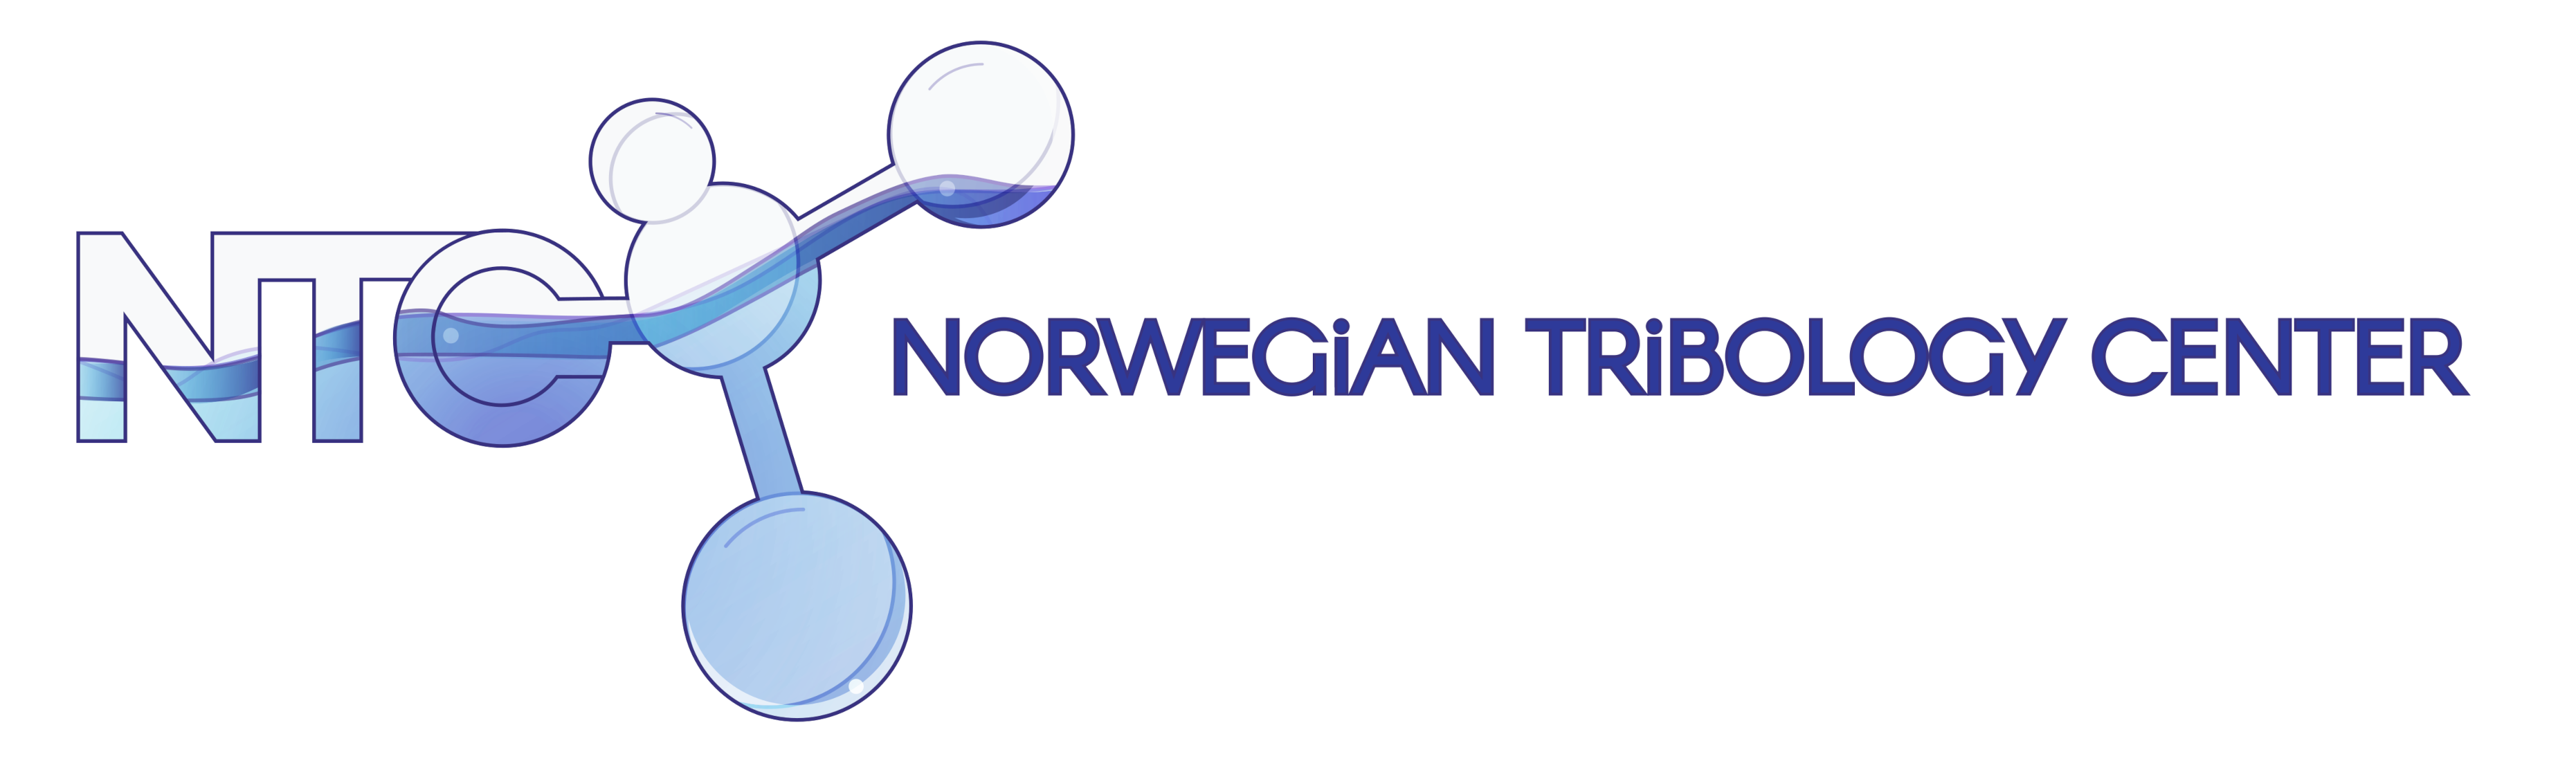 NTC logo